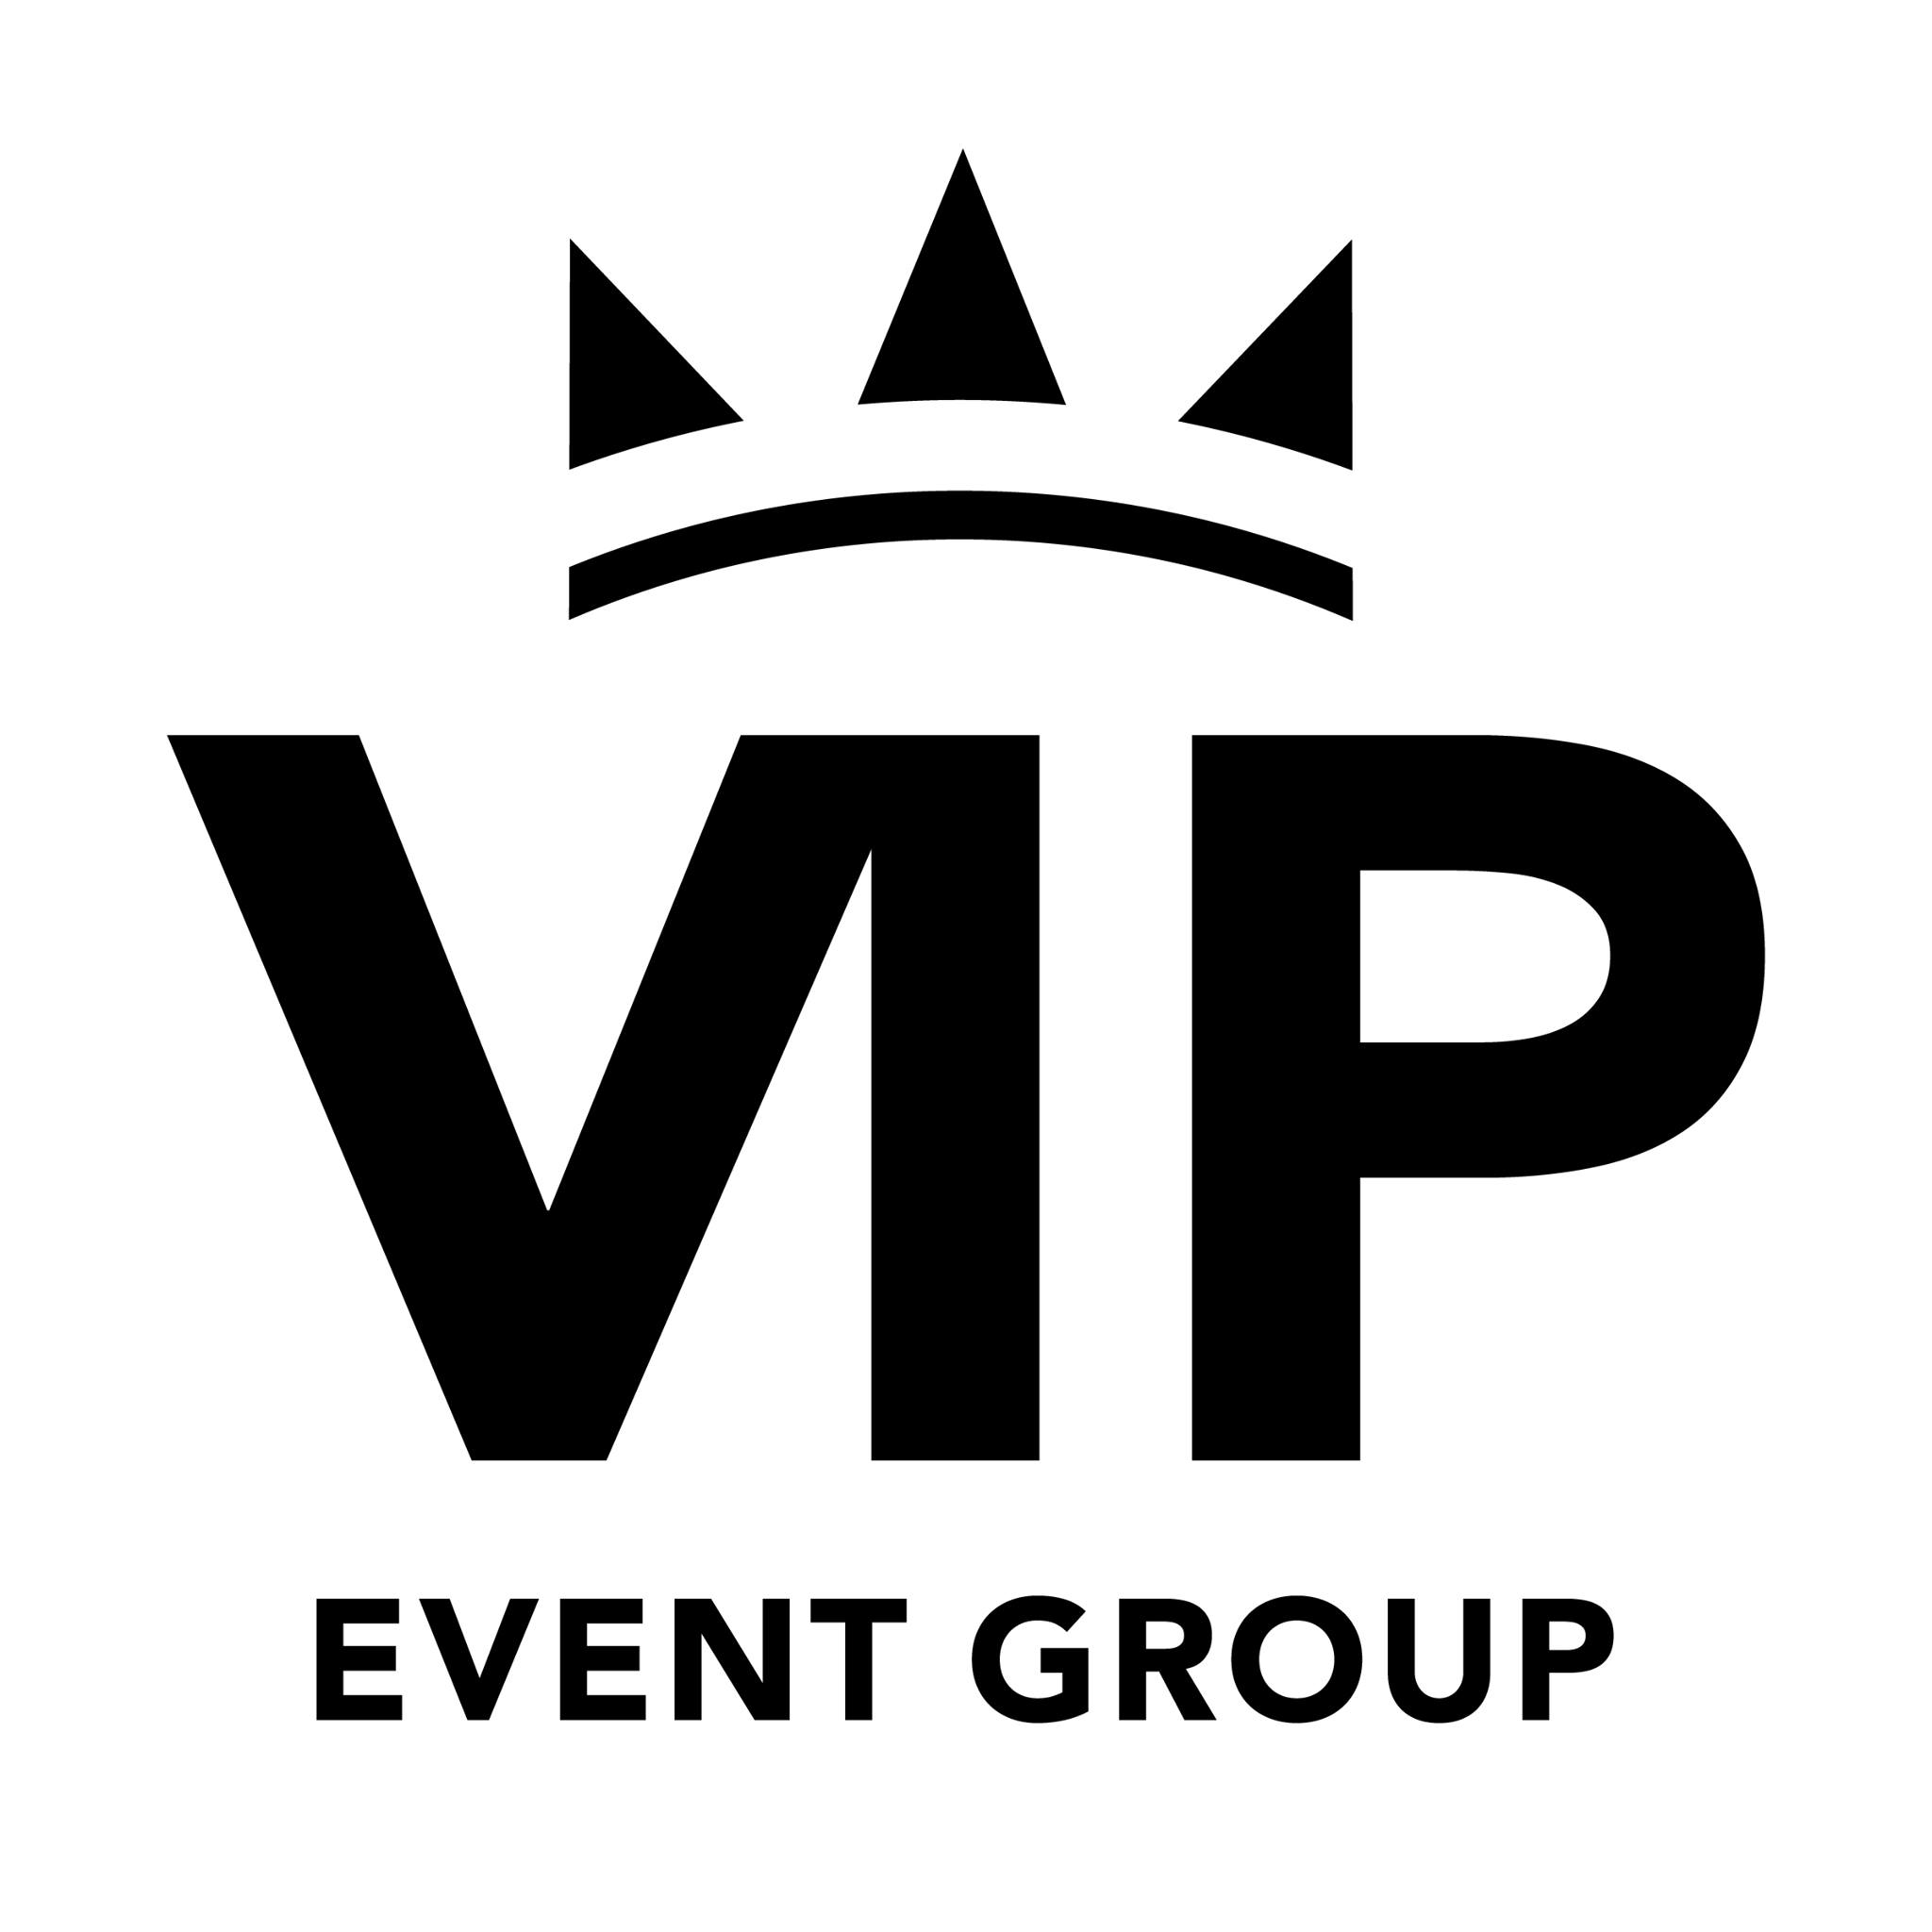 VIP. VIP Group. Meidan VIP event. VIP Империя надпись.